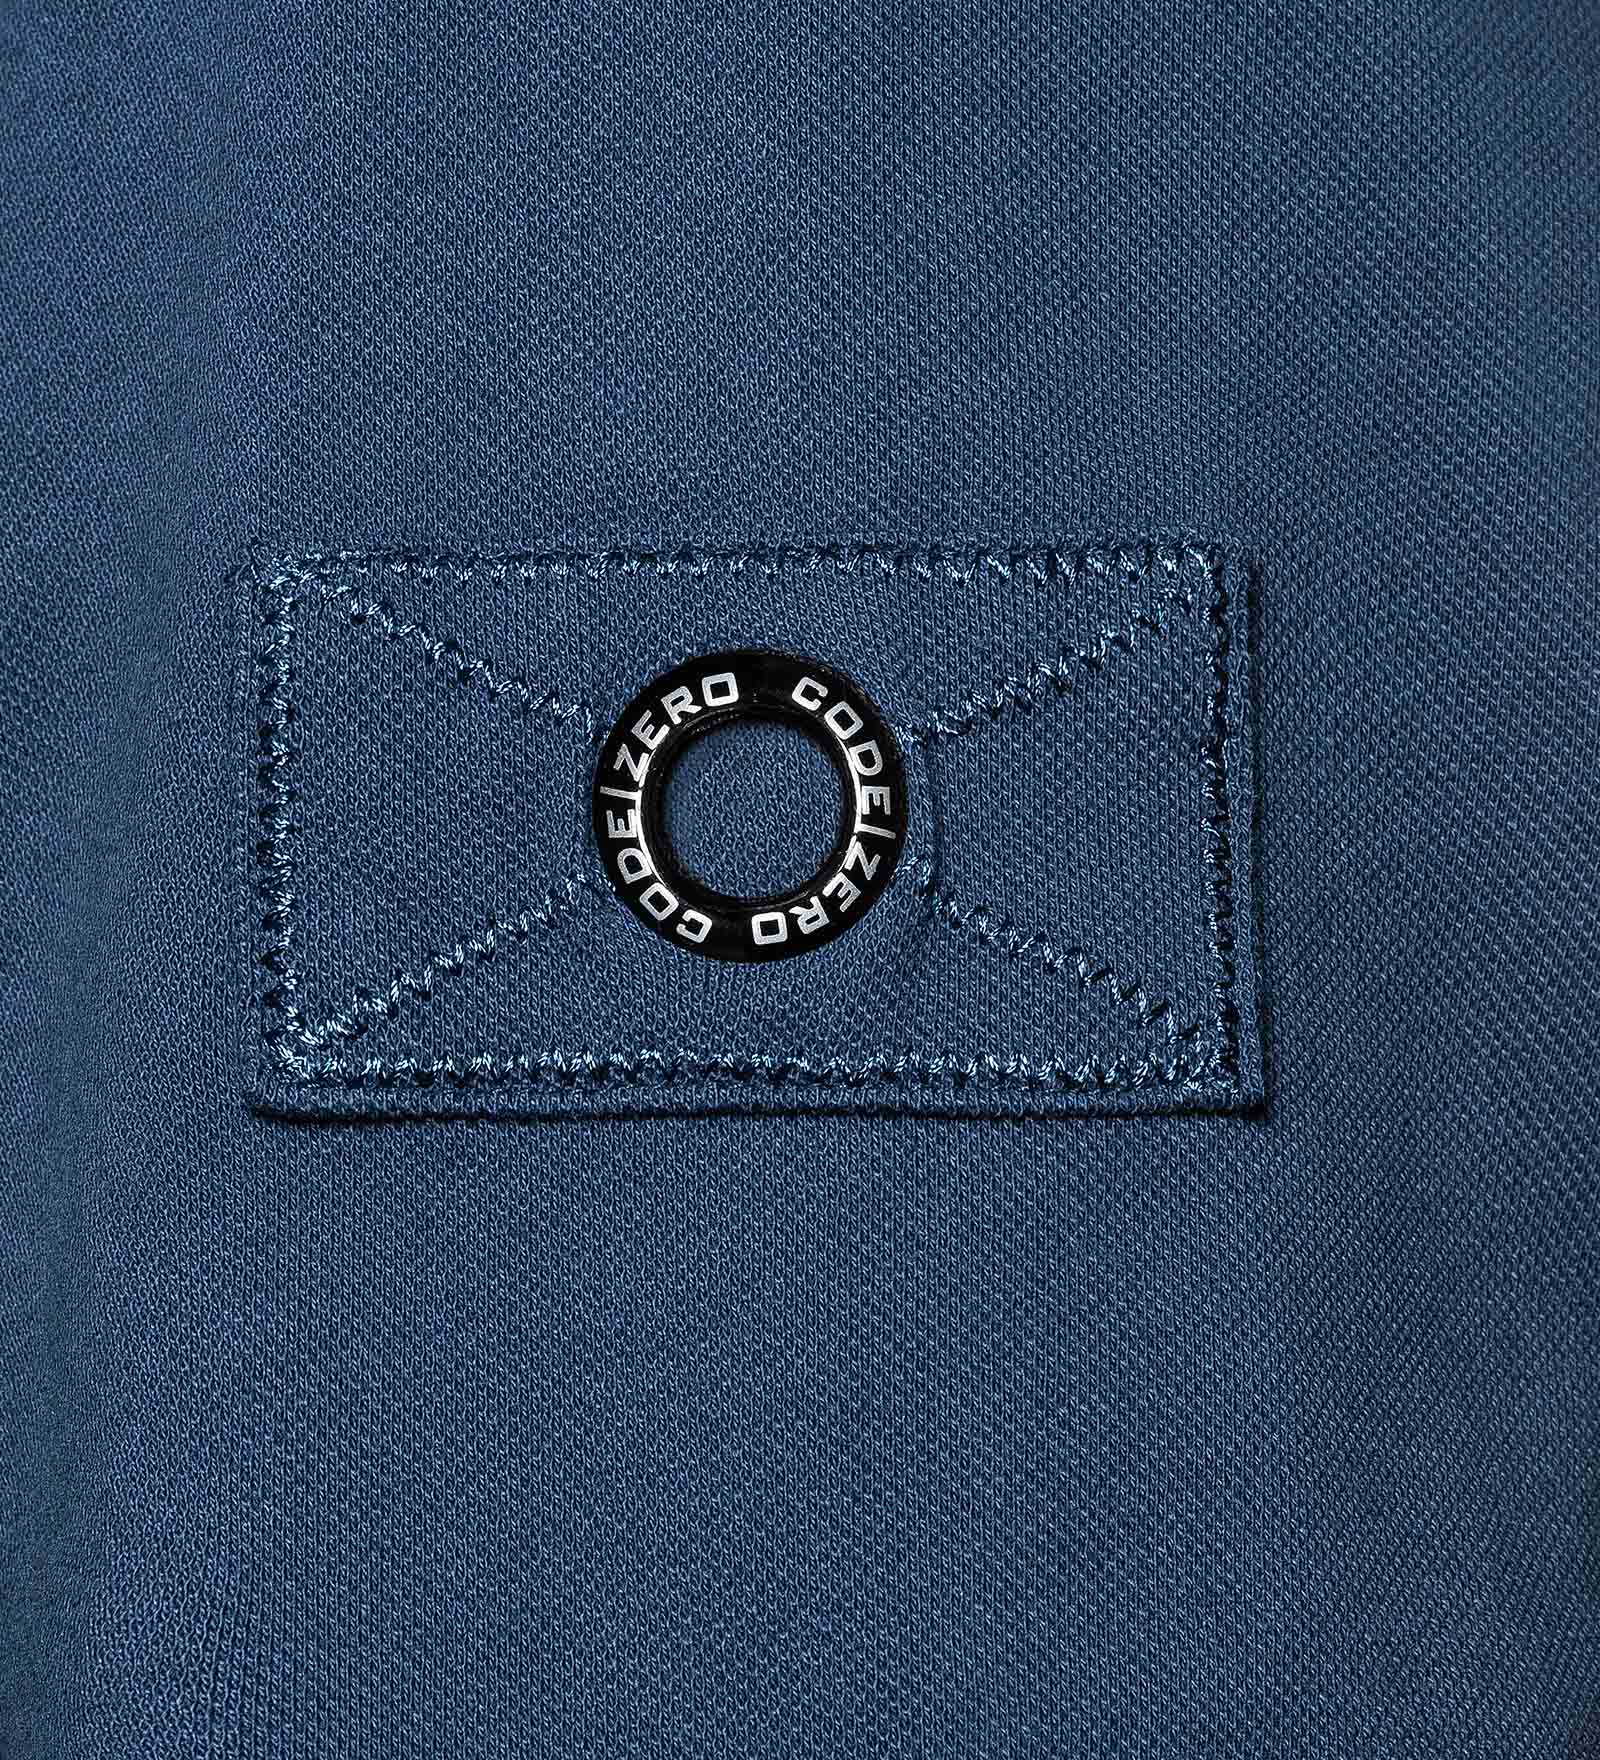 Detail of a blue polo shirt